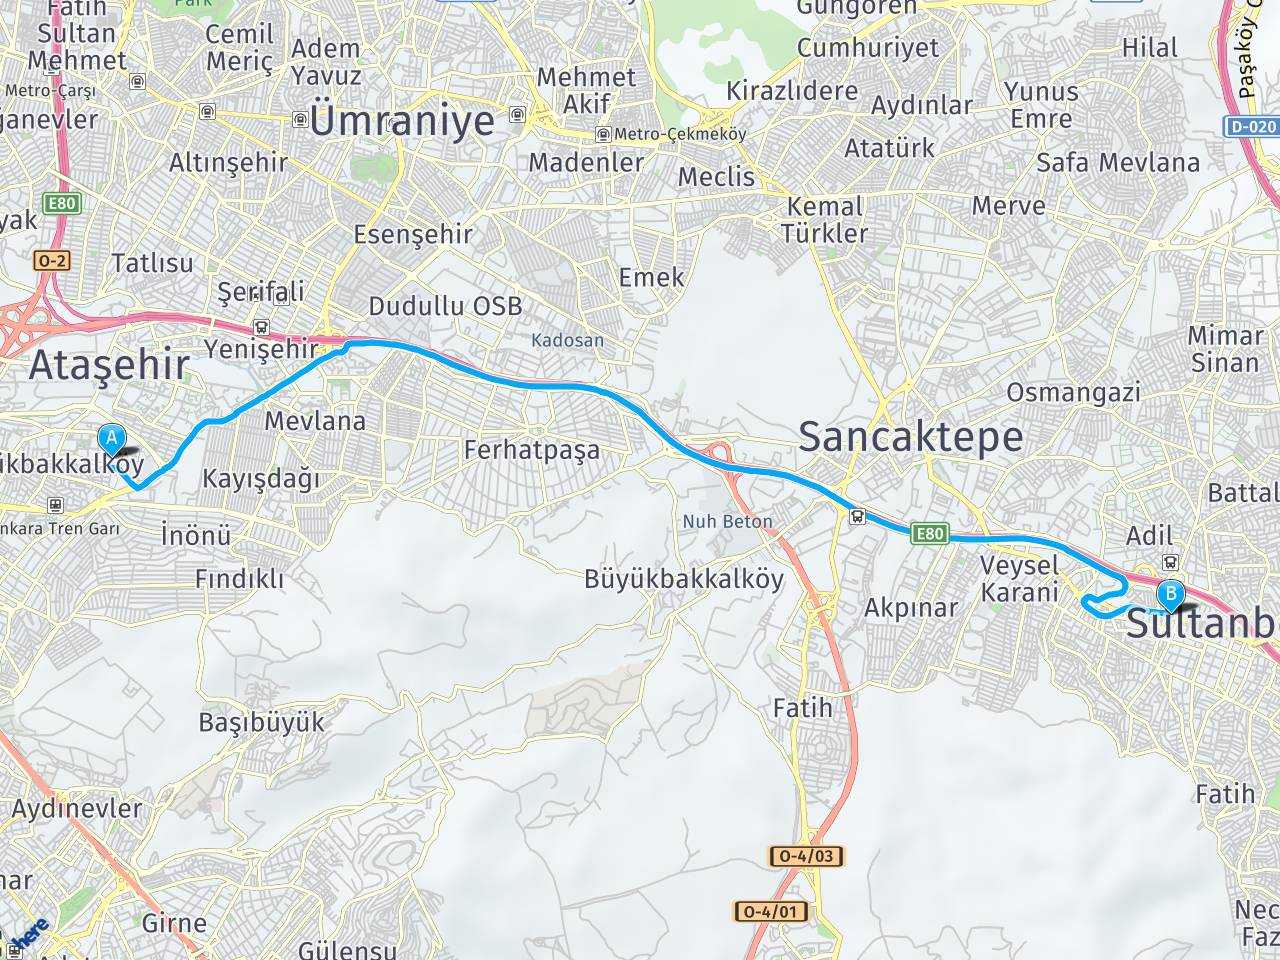 istanbul sultanbeyli istanbul atasehir arasi mesafe istanbul sultanbeyli istanbul atasehir yol haritasi istanbul sultanbeyli istanbul atasehir kac saat kac km